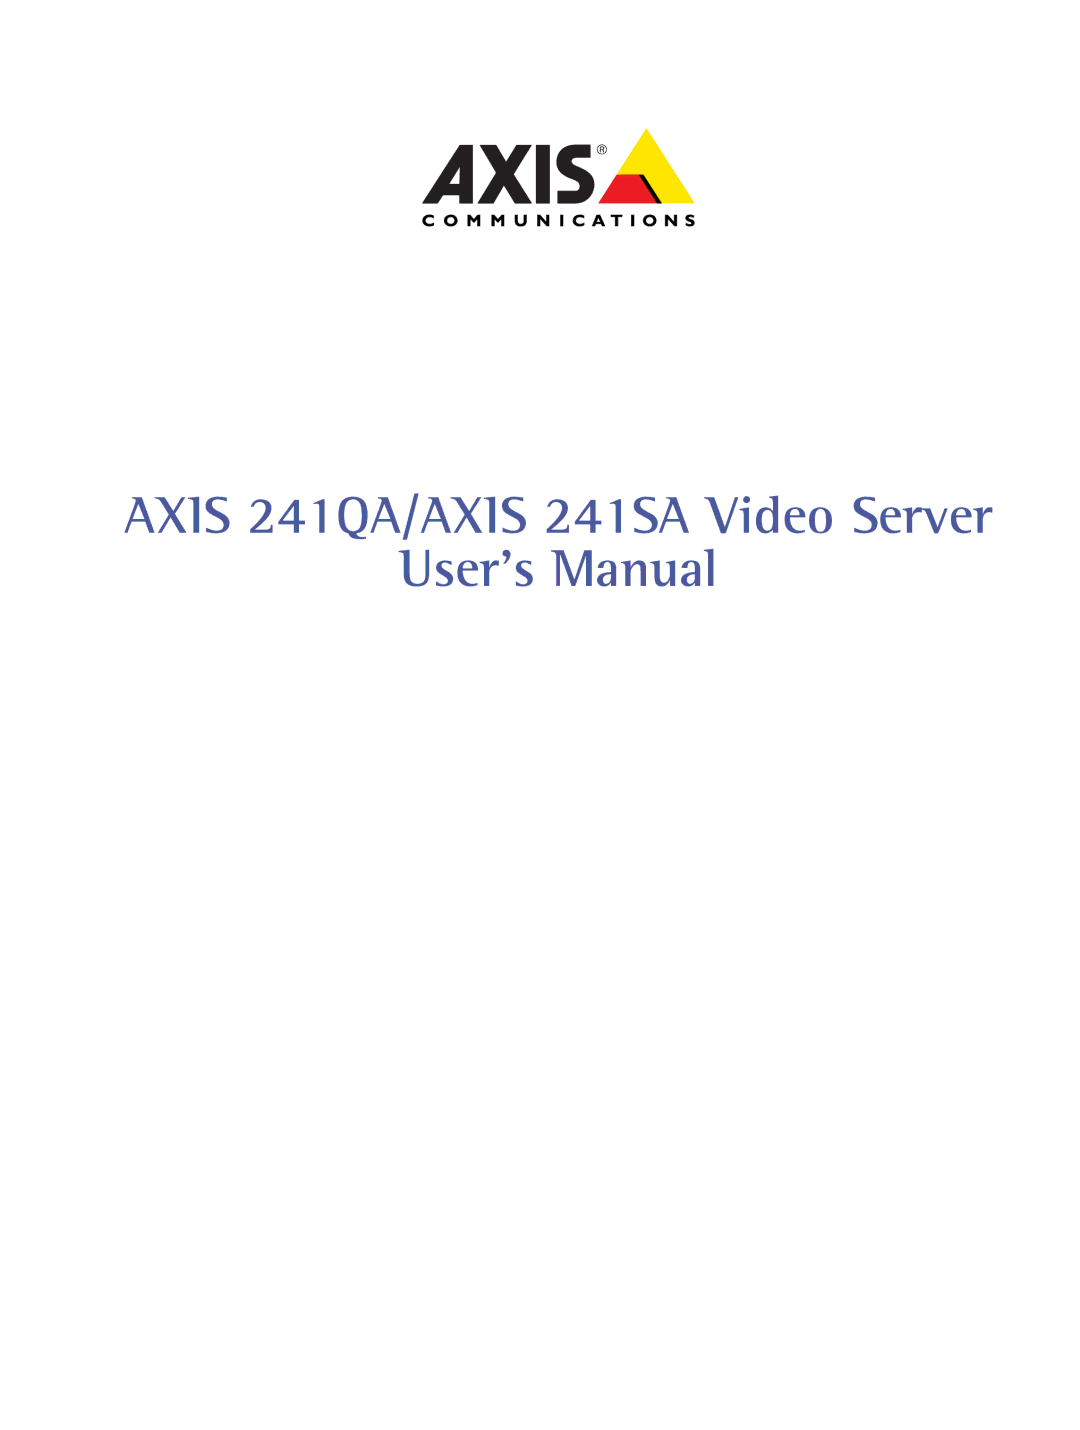 Axis Communications AXIS 241SA user manual User’s Manual 